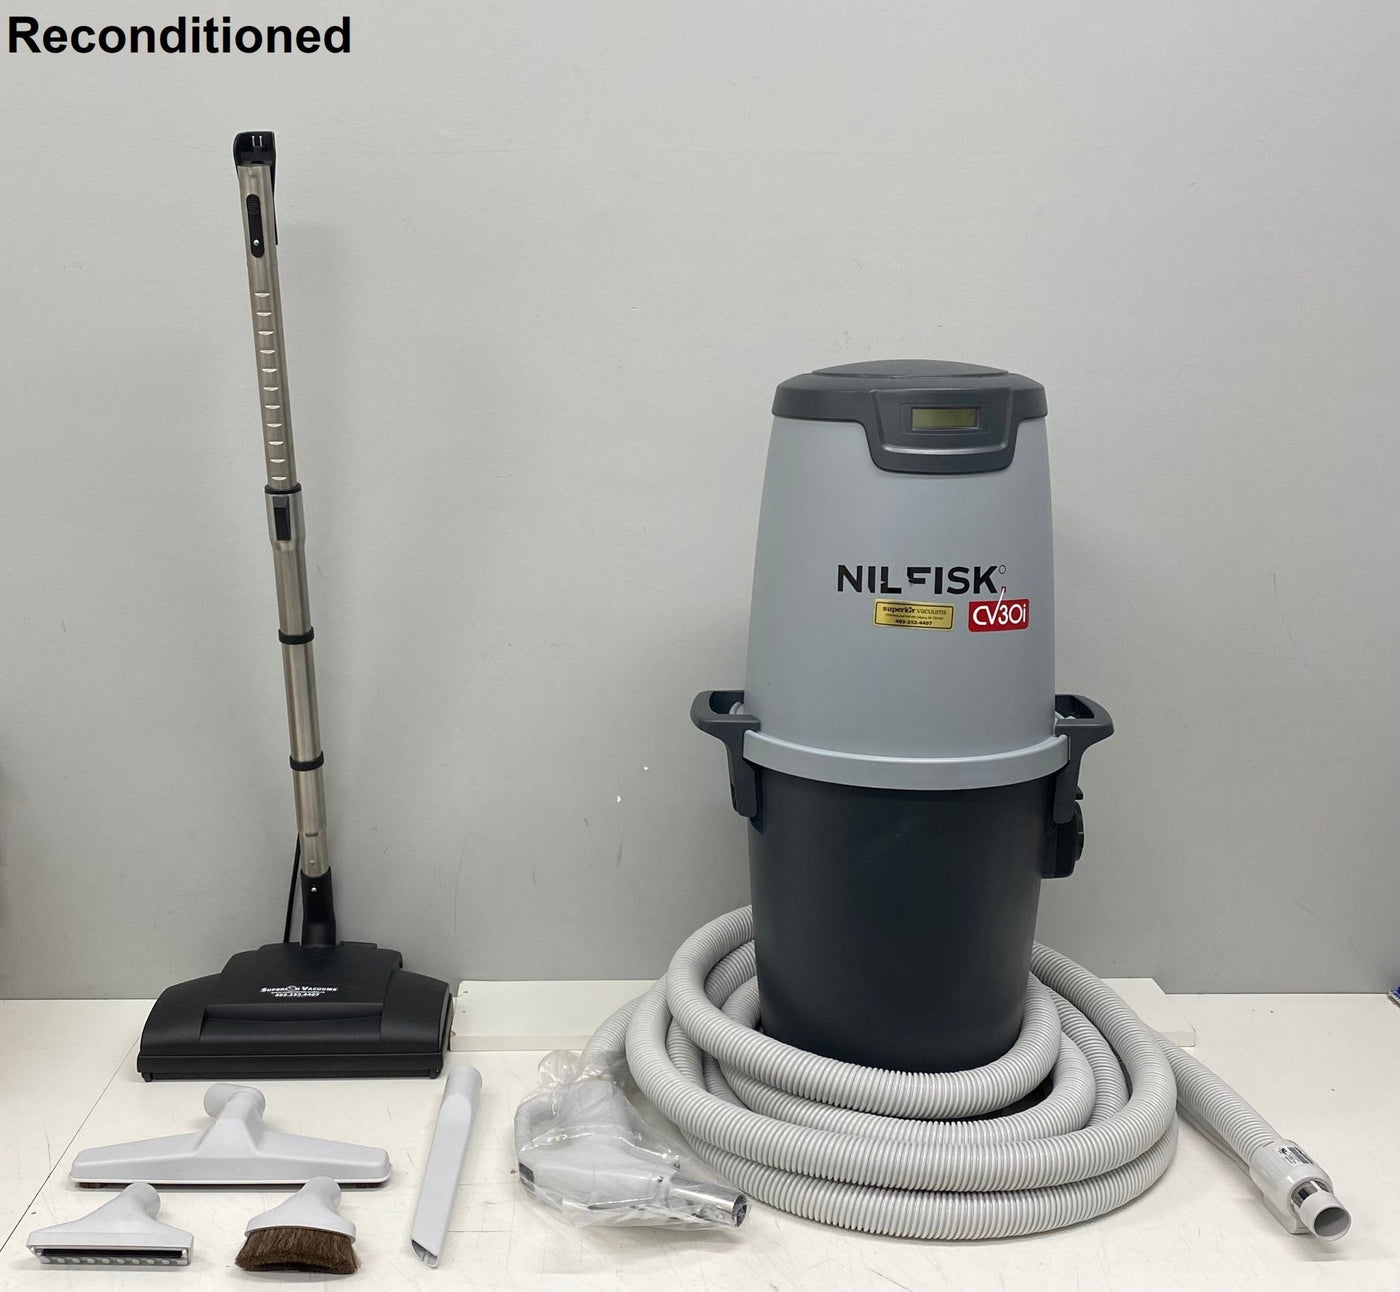 Efficient and Silent Central Vacuum System - Nilfisk CV30i